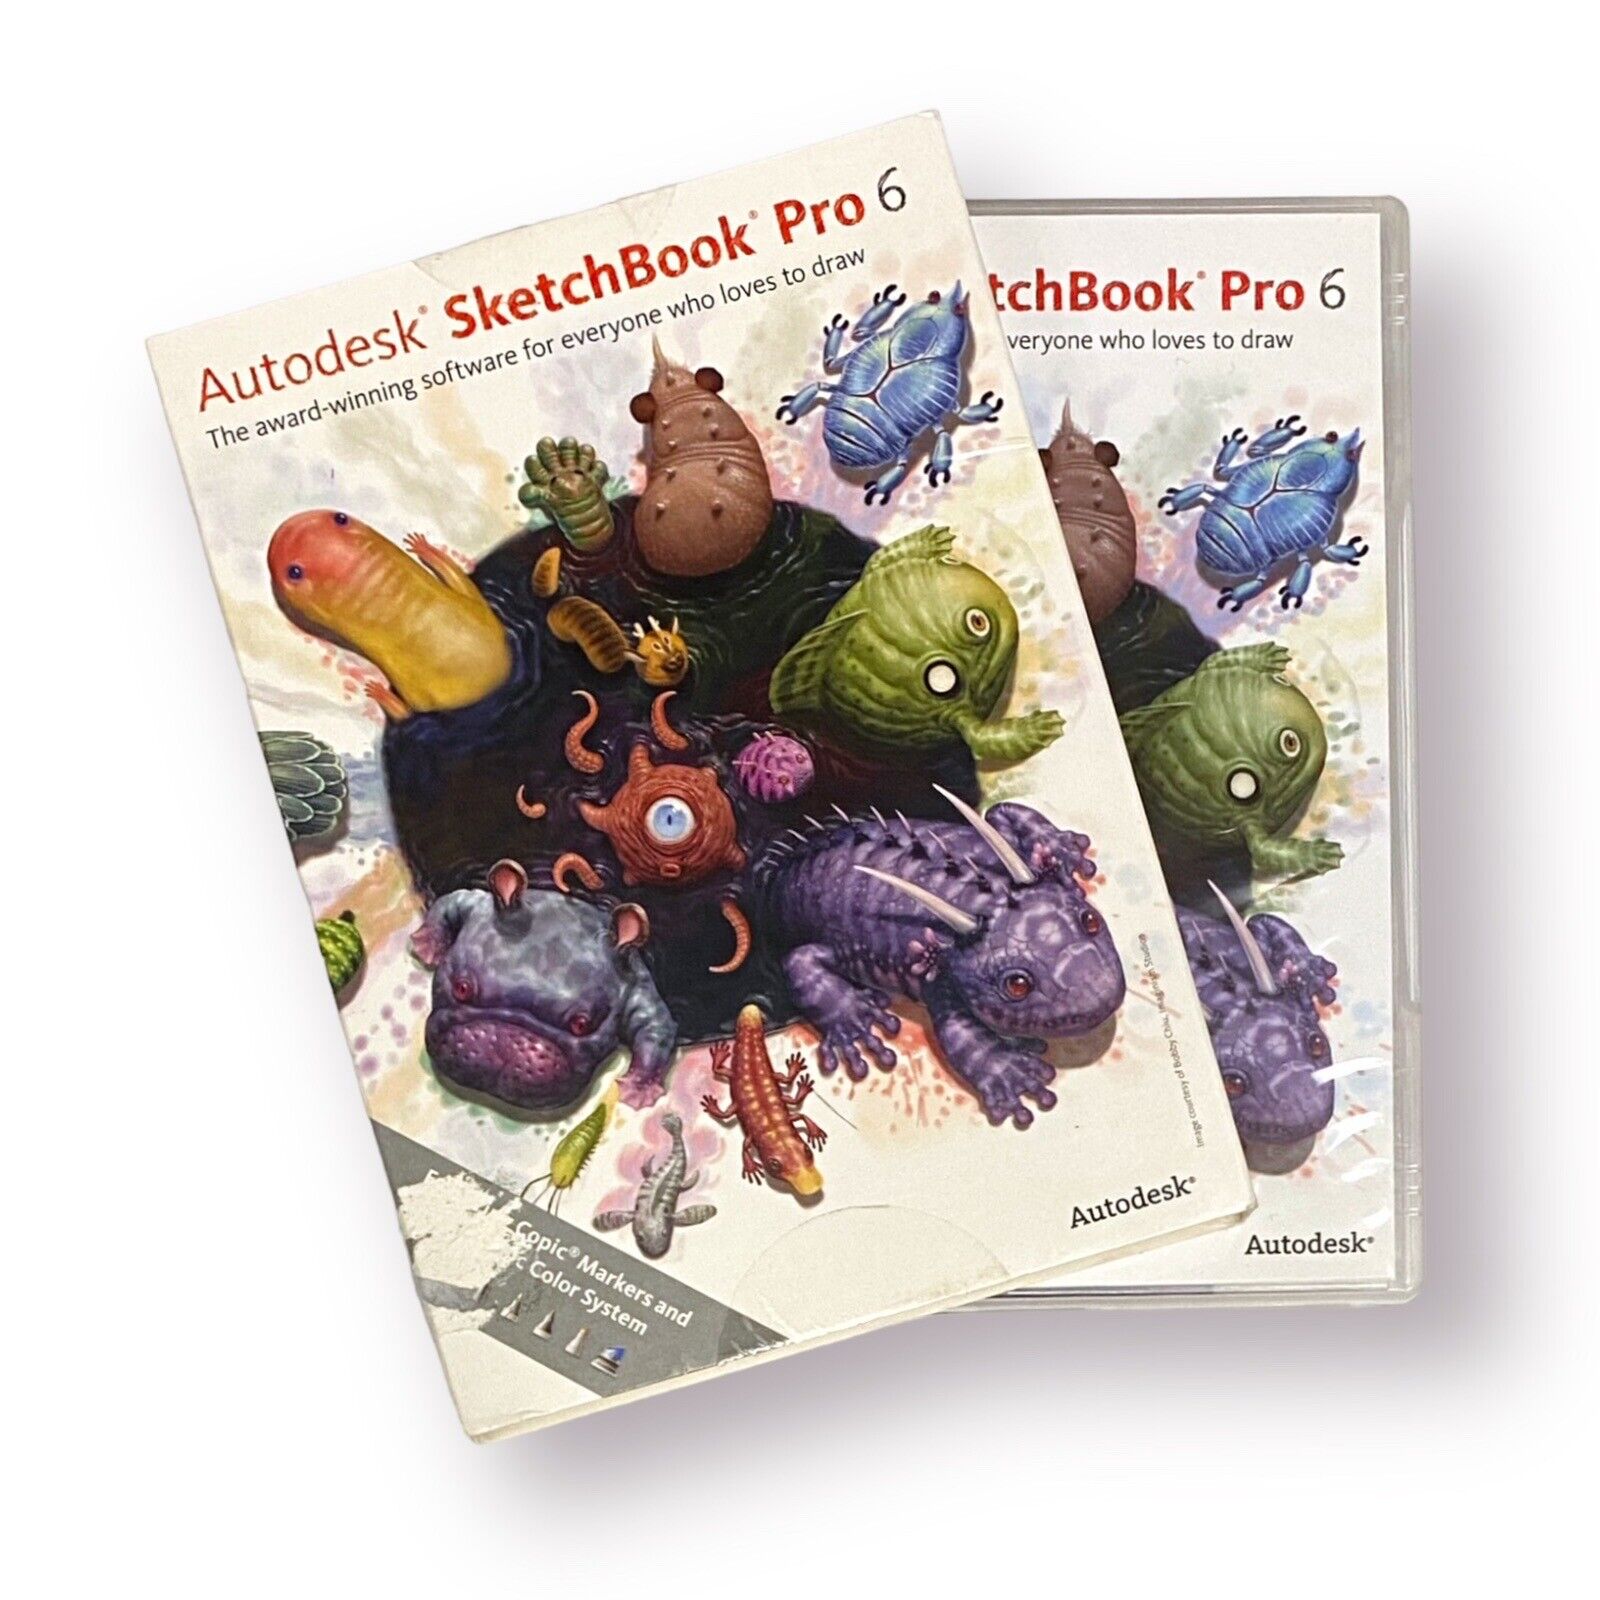 Autodesk SketchBook Pro 6 (PC / Mac, 2012) Key Code Included